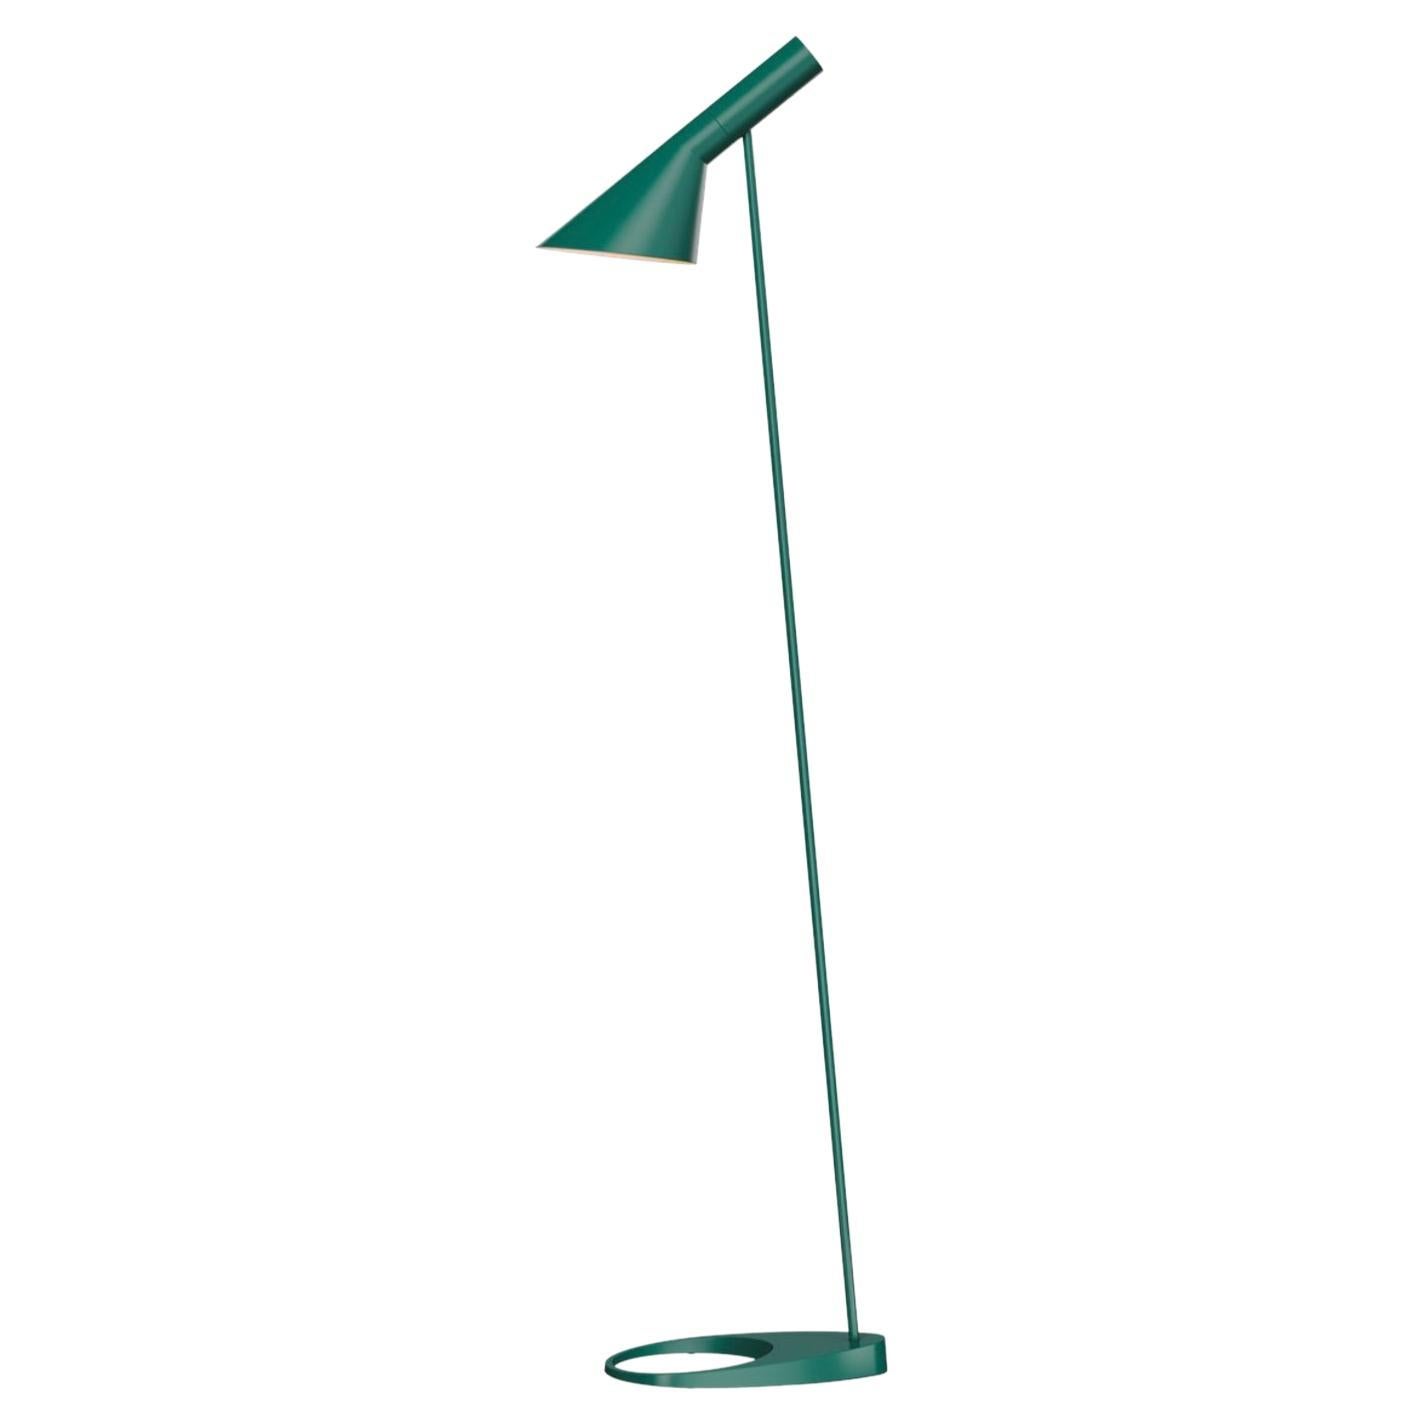 Arne Jacobsen AJ Floor Lamp 1957 in Dark Green for Louis Poulsen